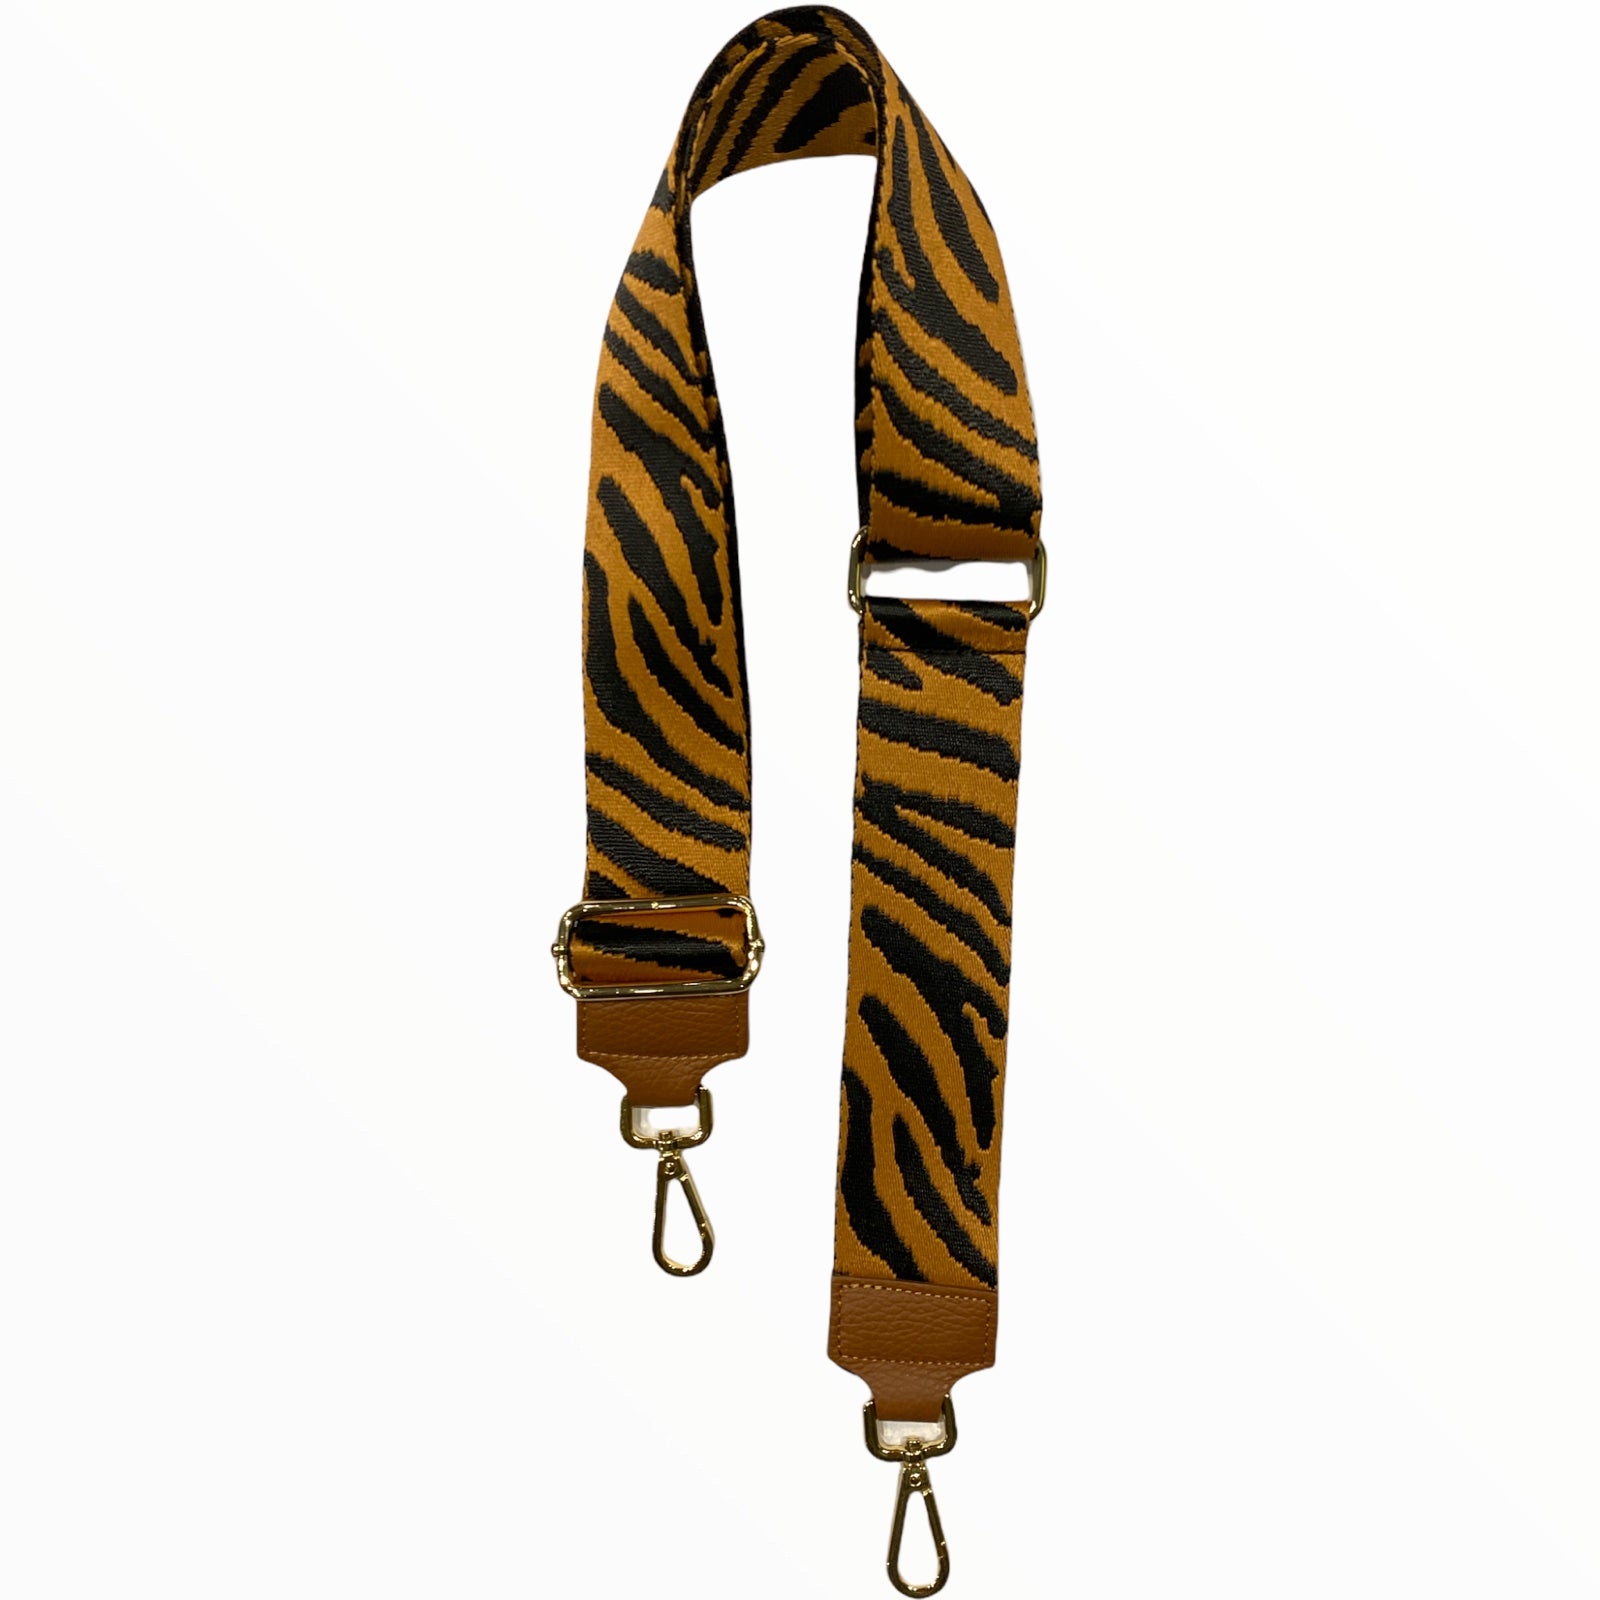 Taba zebra-print adjustable strap with leather details